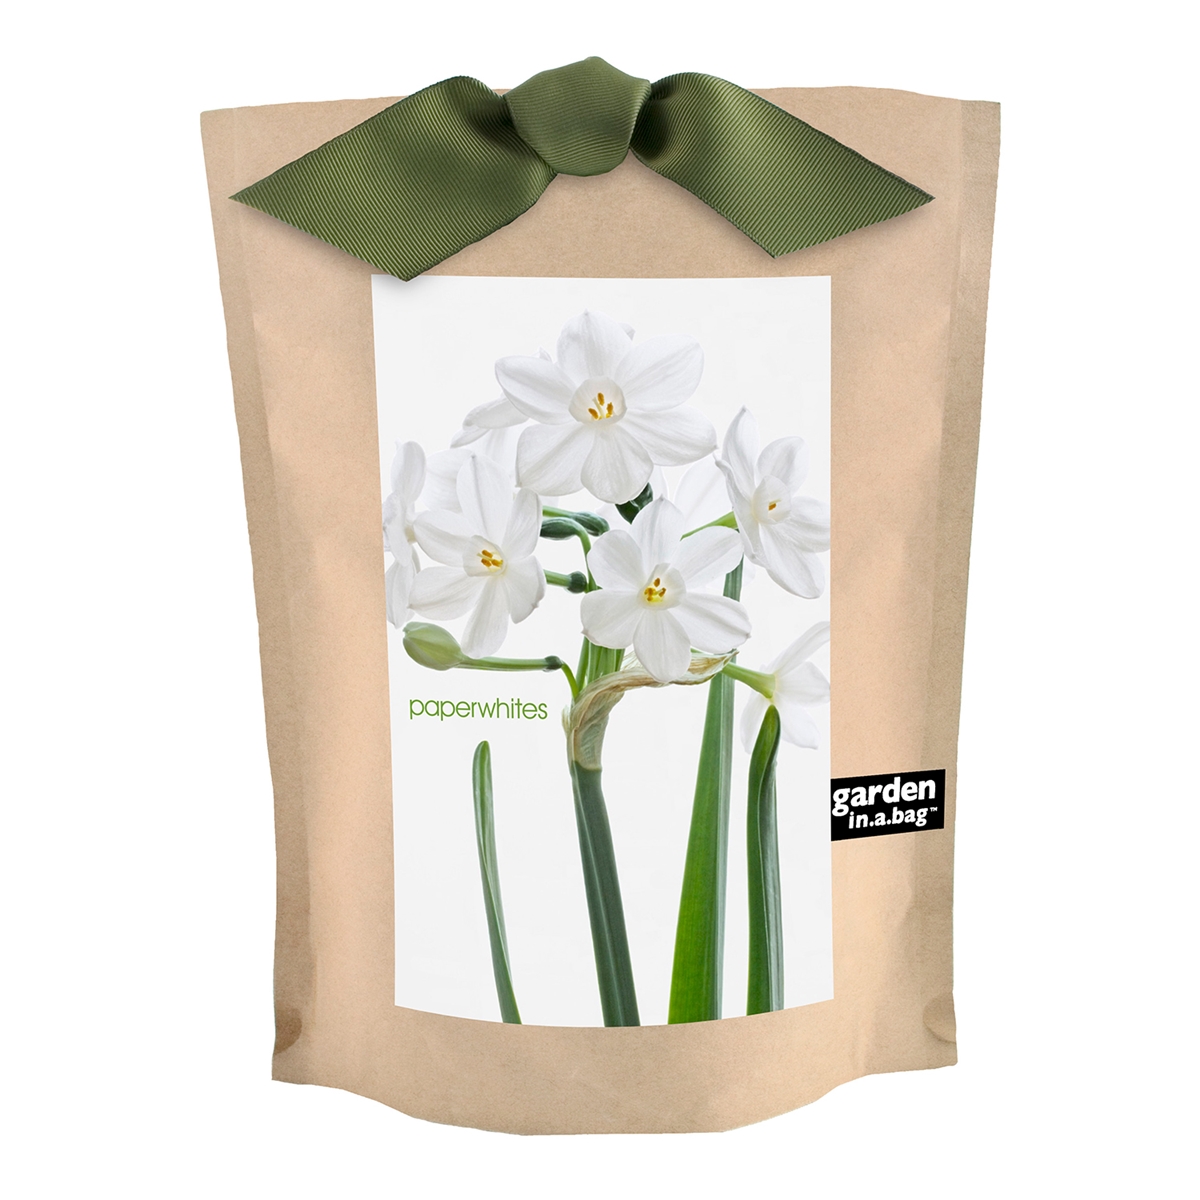 Paperwhite Grow Kit